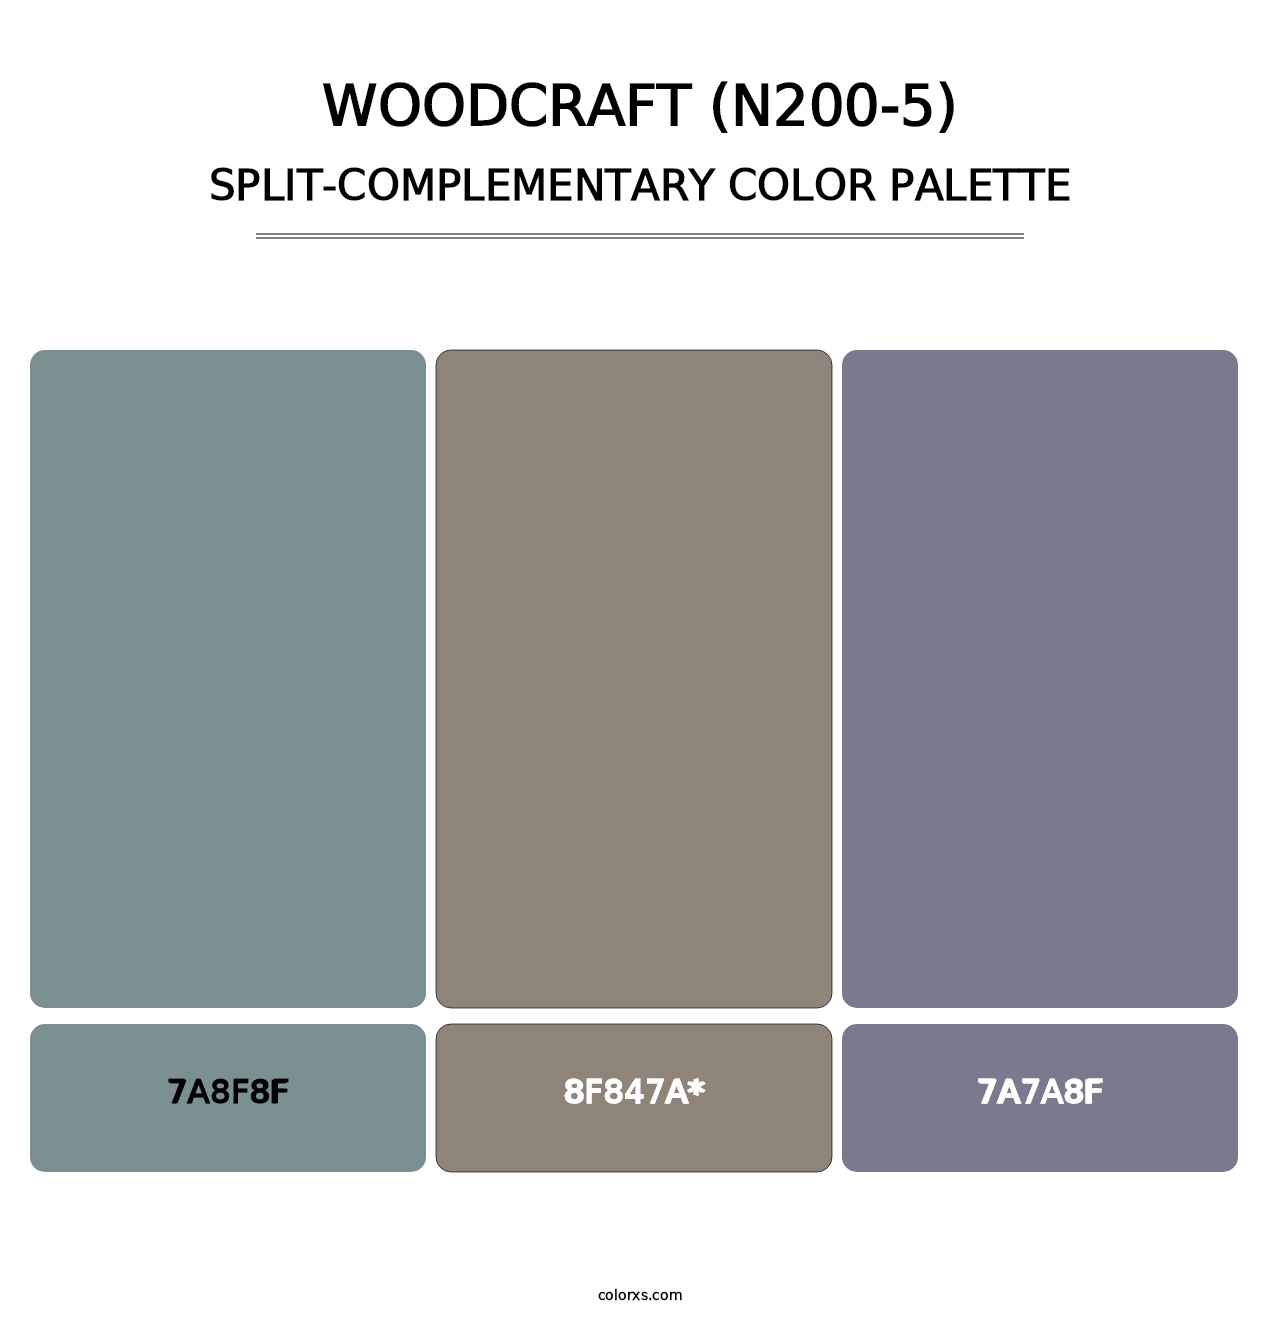 Woodcraft (N200-5) - Split-Complementary Color Palette